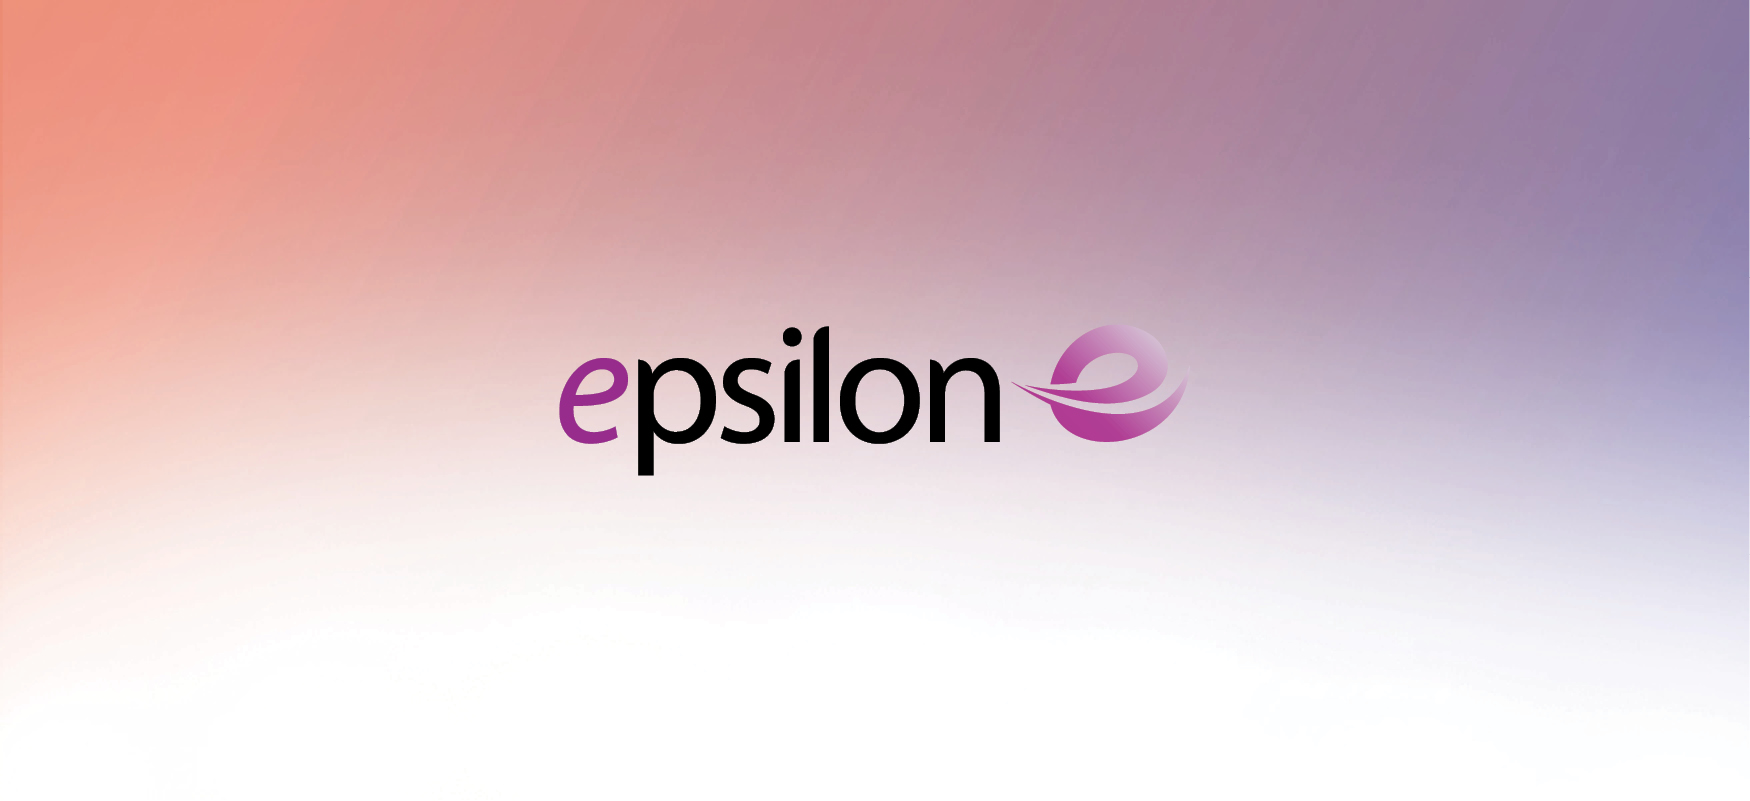 Epsilon Eyes Enterprise Market; Positions SD-WAN As its New Strategic Offering